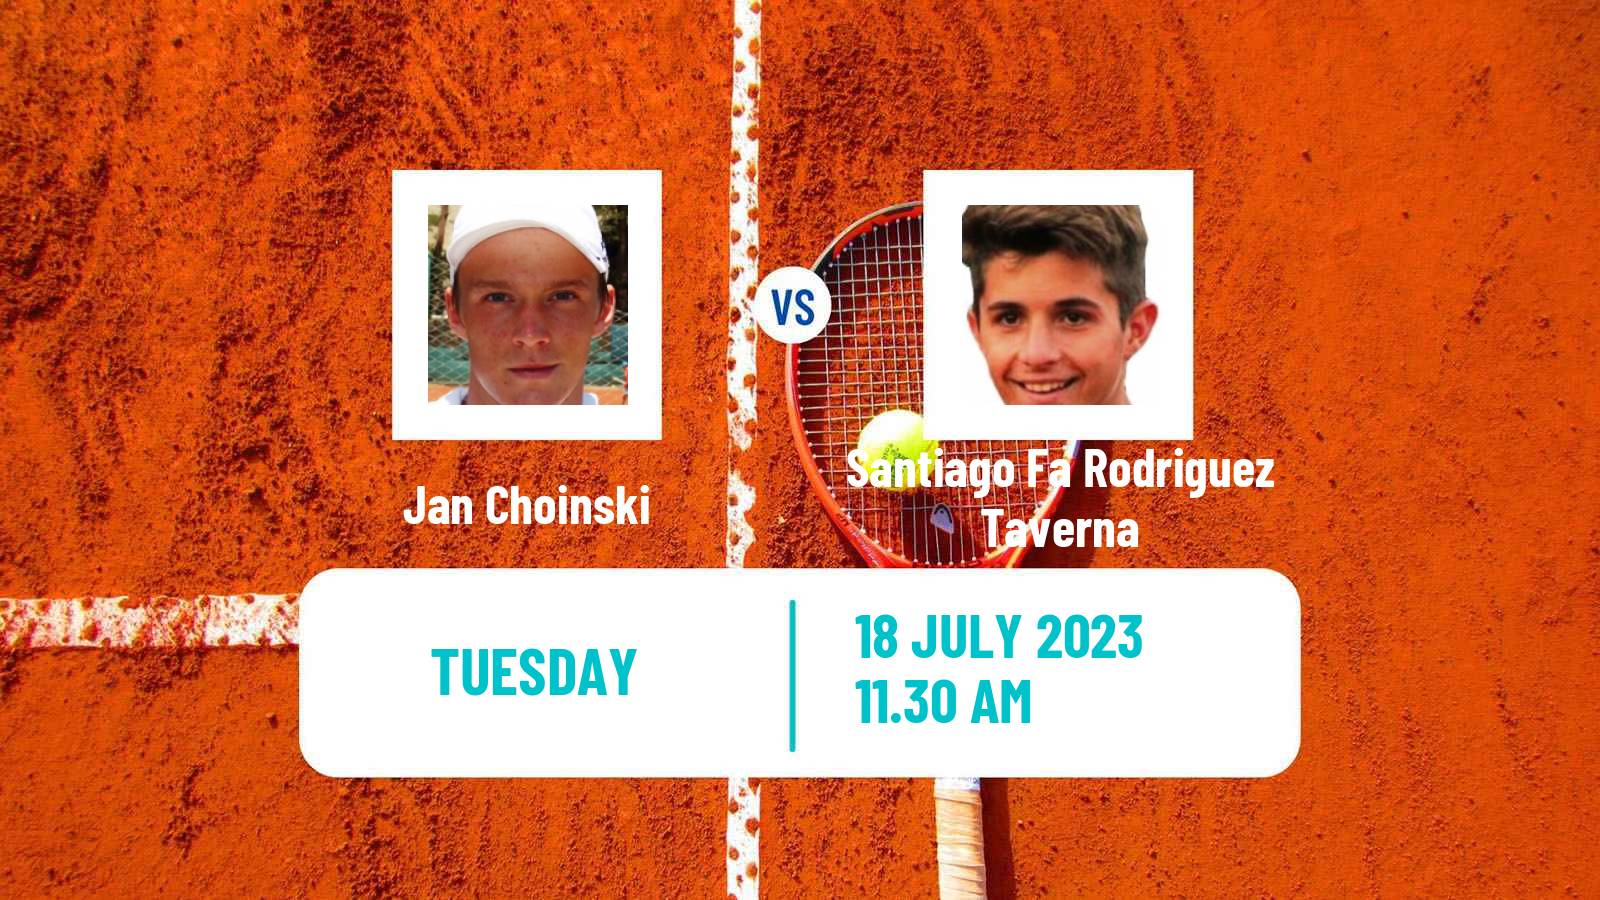 Tennis Amersfoort Challenger Men Jan Choinski - Santiago Fa Rodriguez Taverna